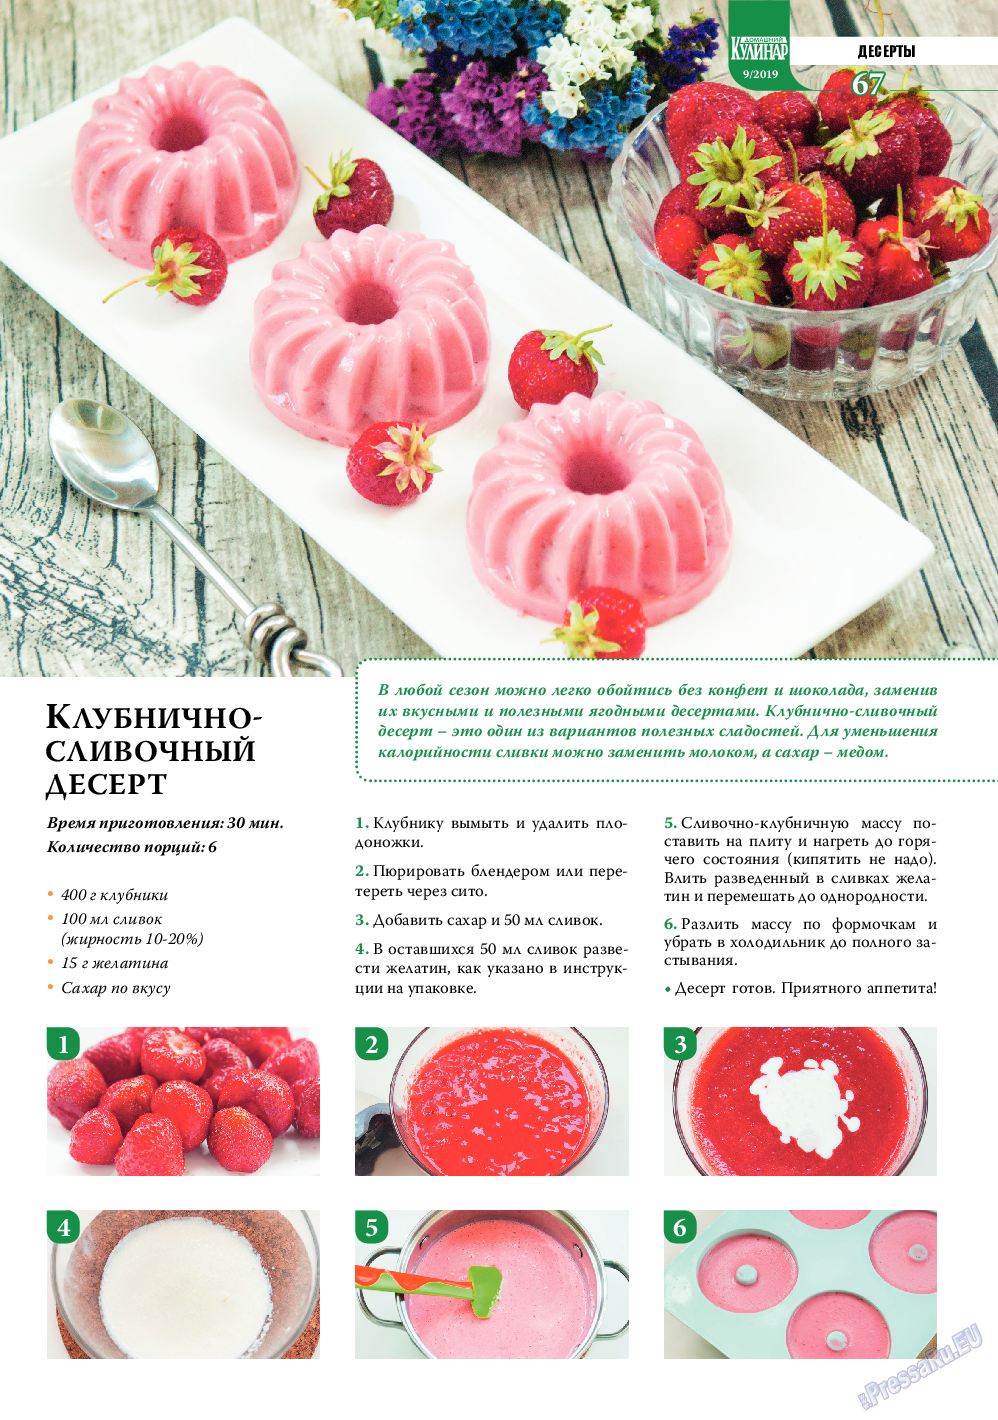 Домашний кулинар (журнал). 2019 год, номер 9, стр. 67